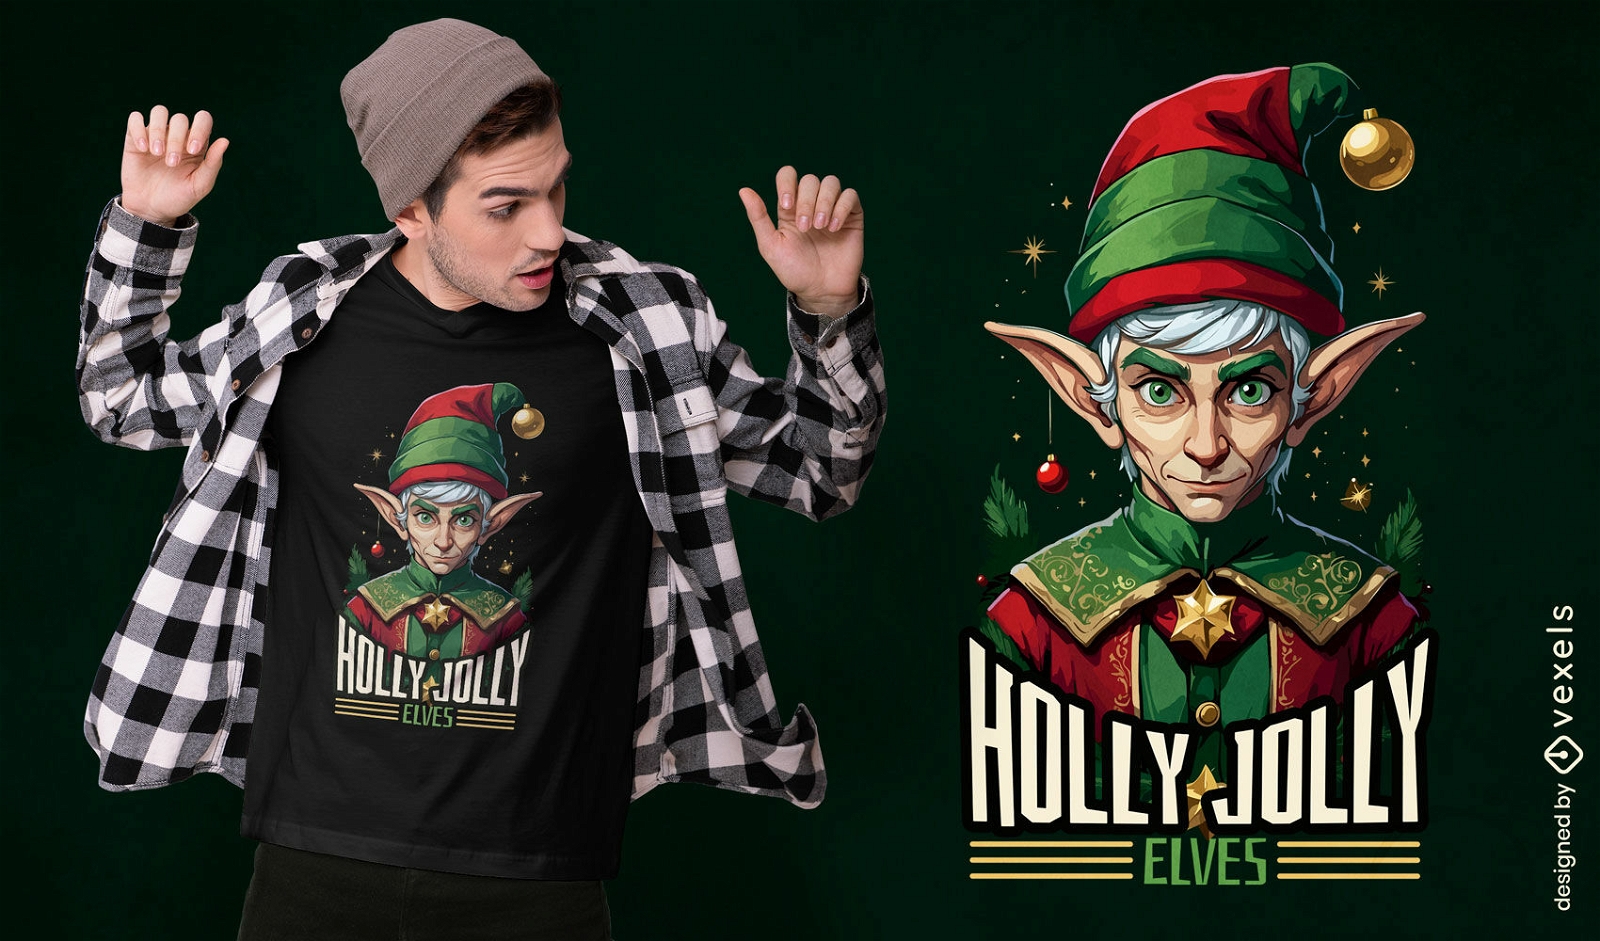 Holly jolly elves t-shirt design